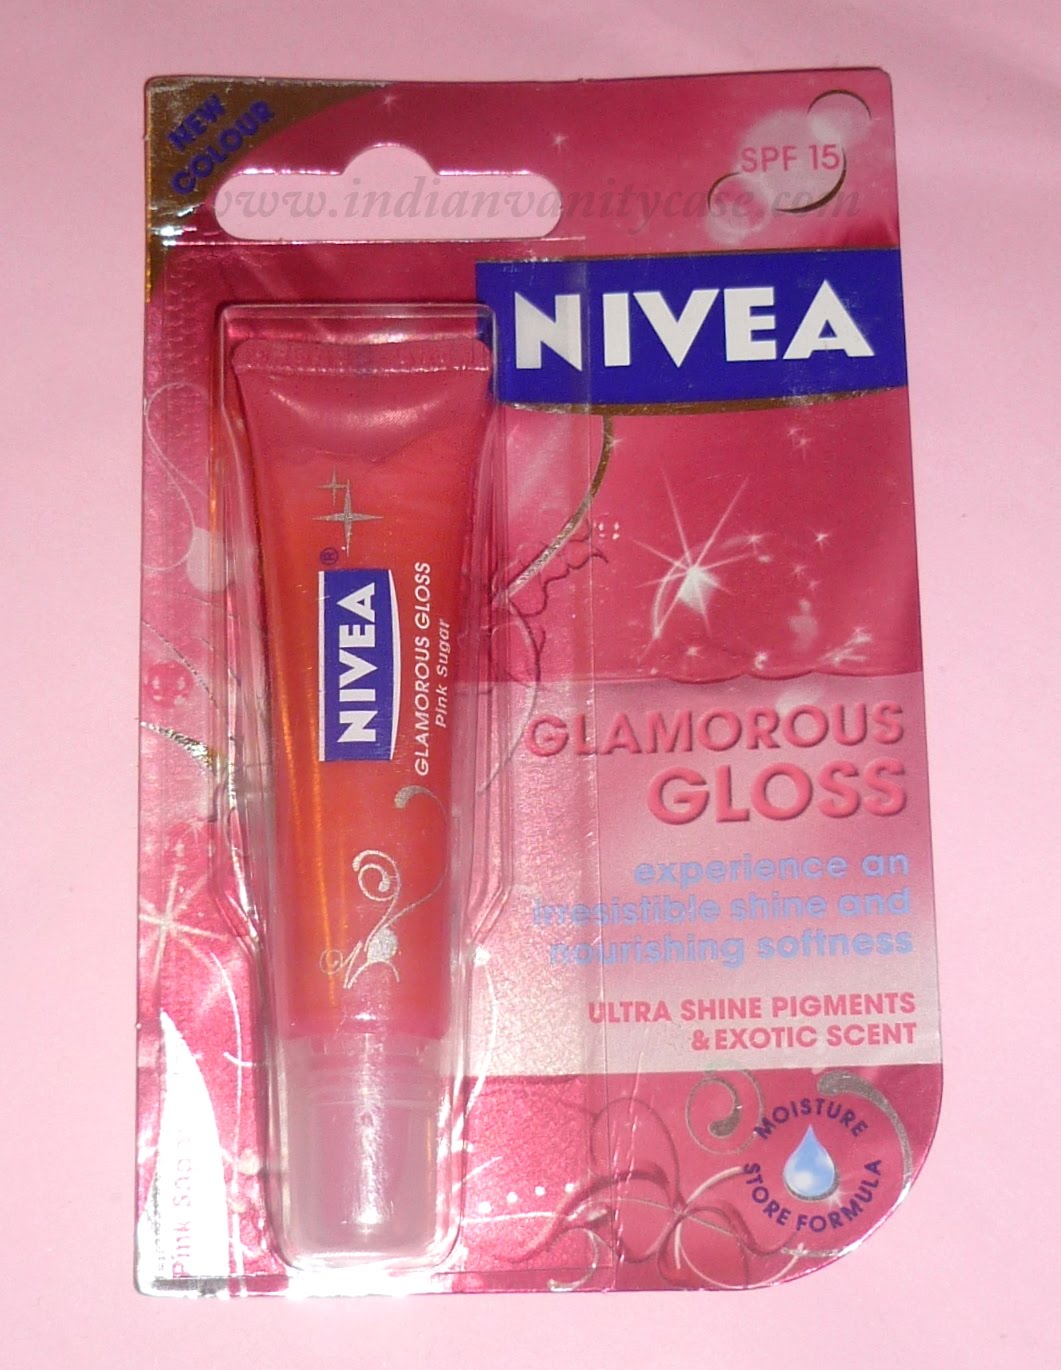 http://3.bp.blogspot.com/_K-Xz3c9hTQc/TG4o-dL50WI/AAAAAAAADBI/AVOlOIDz0X8/s1600/Nivea+glamorous+gloss+pink+sugar.jpg